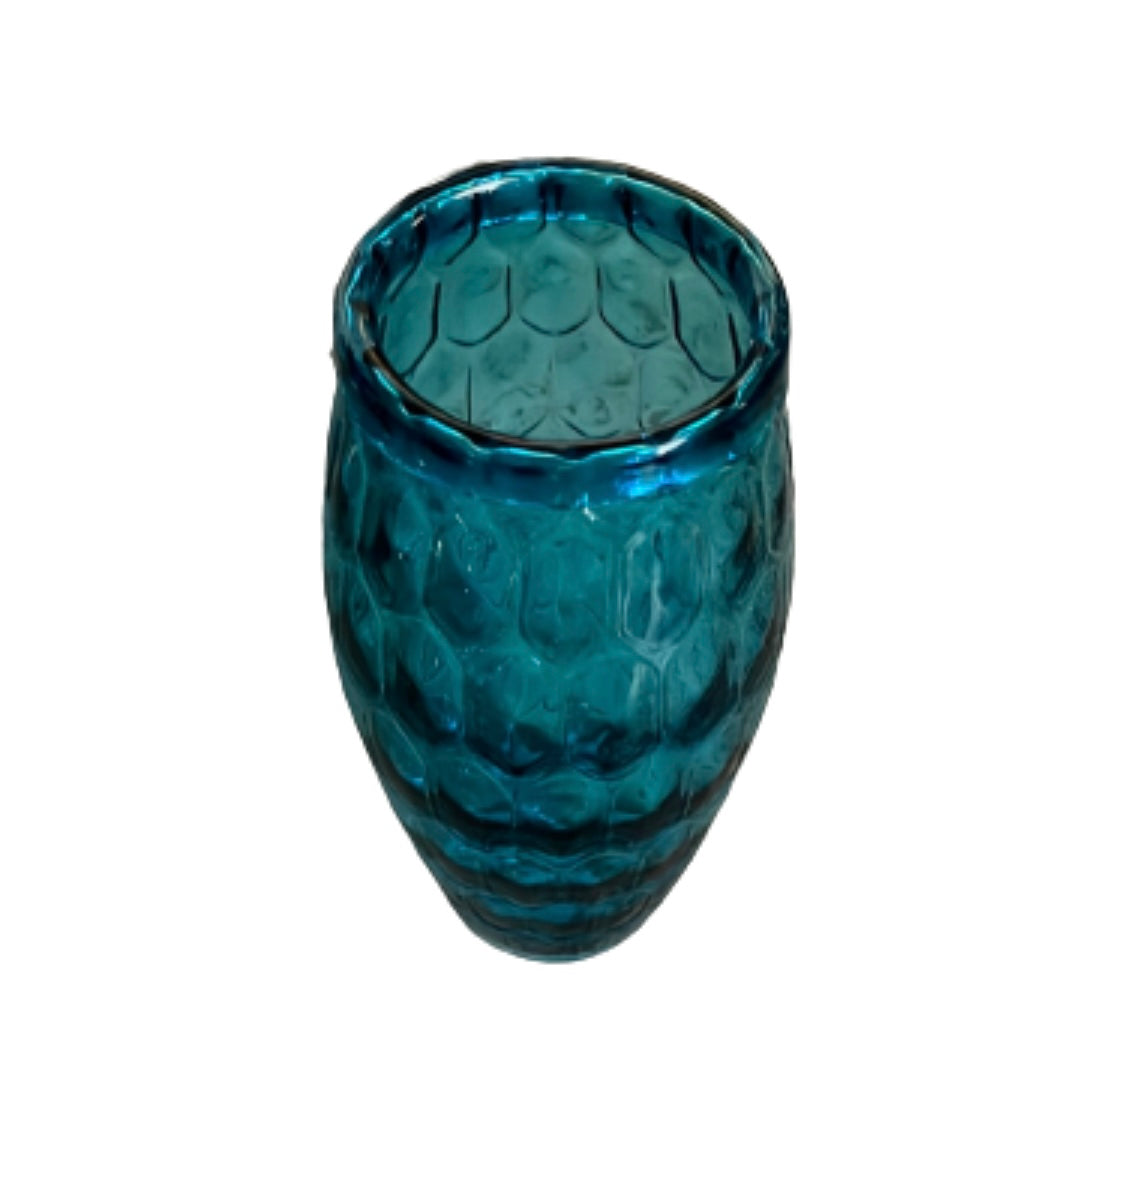 SILICON VALLEY: Monica’s 's Ashland Decorative Teal Vase (12 inch)